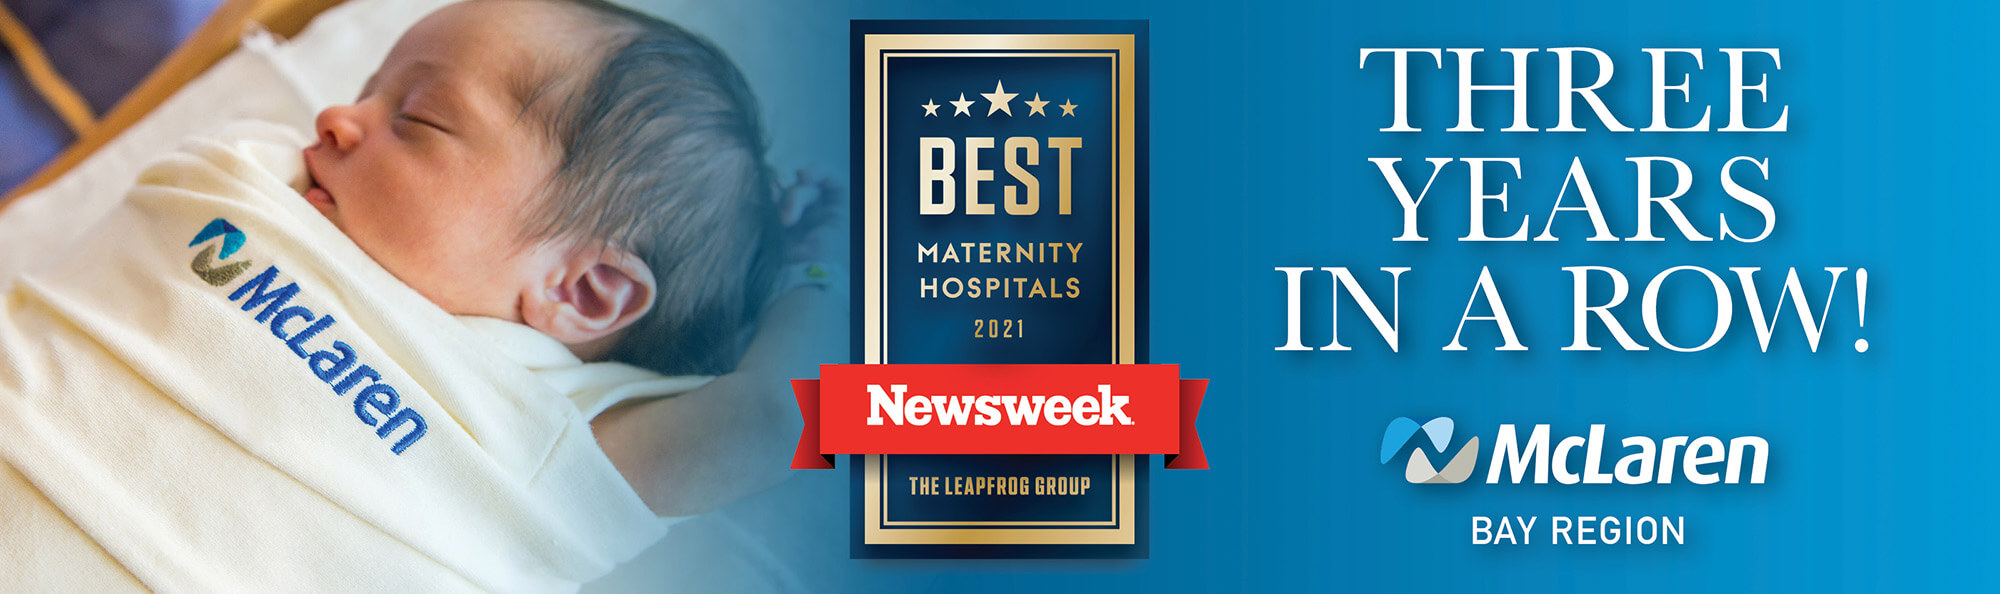 Newsweek Maternity Hospital Award - 3 years